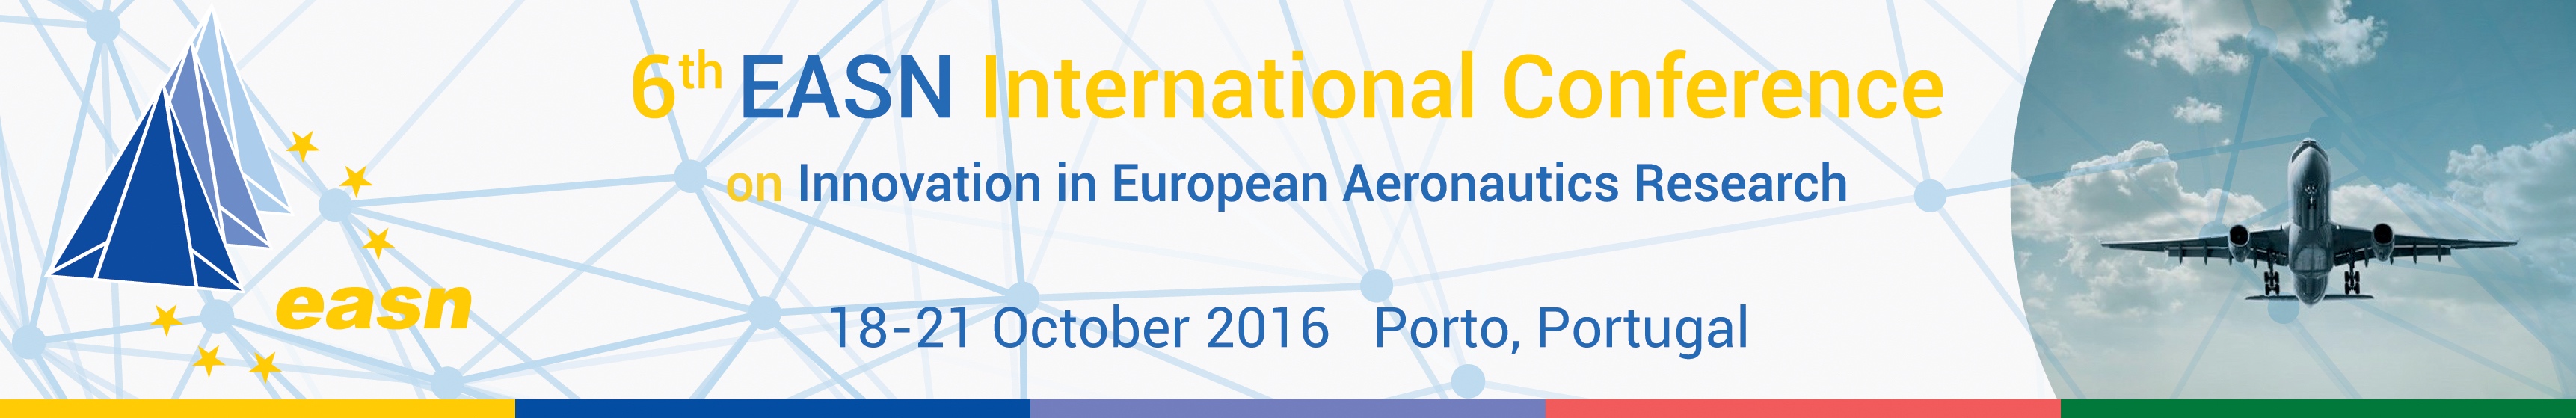 6th EASN International Conference on Innovation in European Aeronautics Research